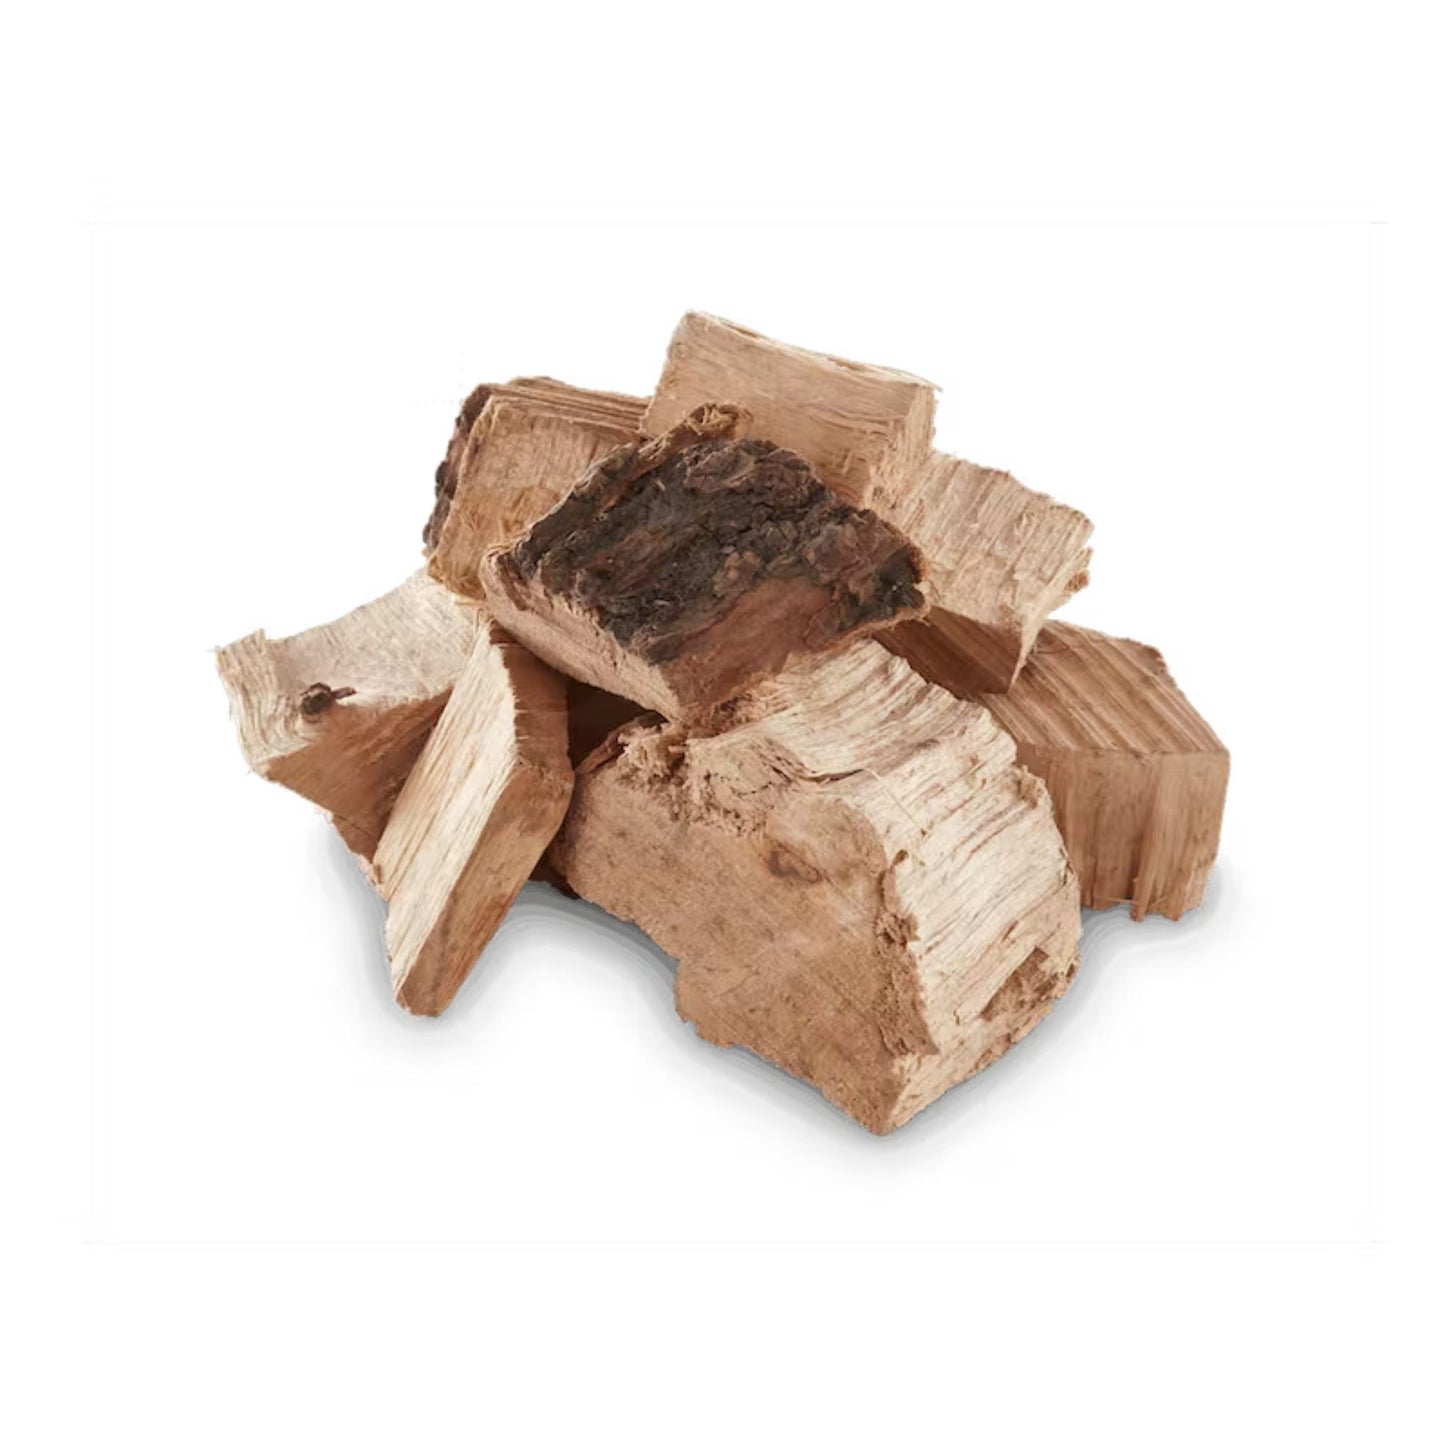 Pecan Wood Chunks